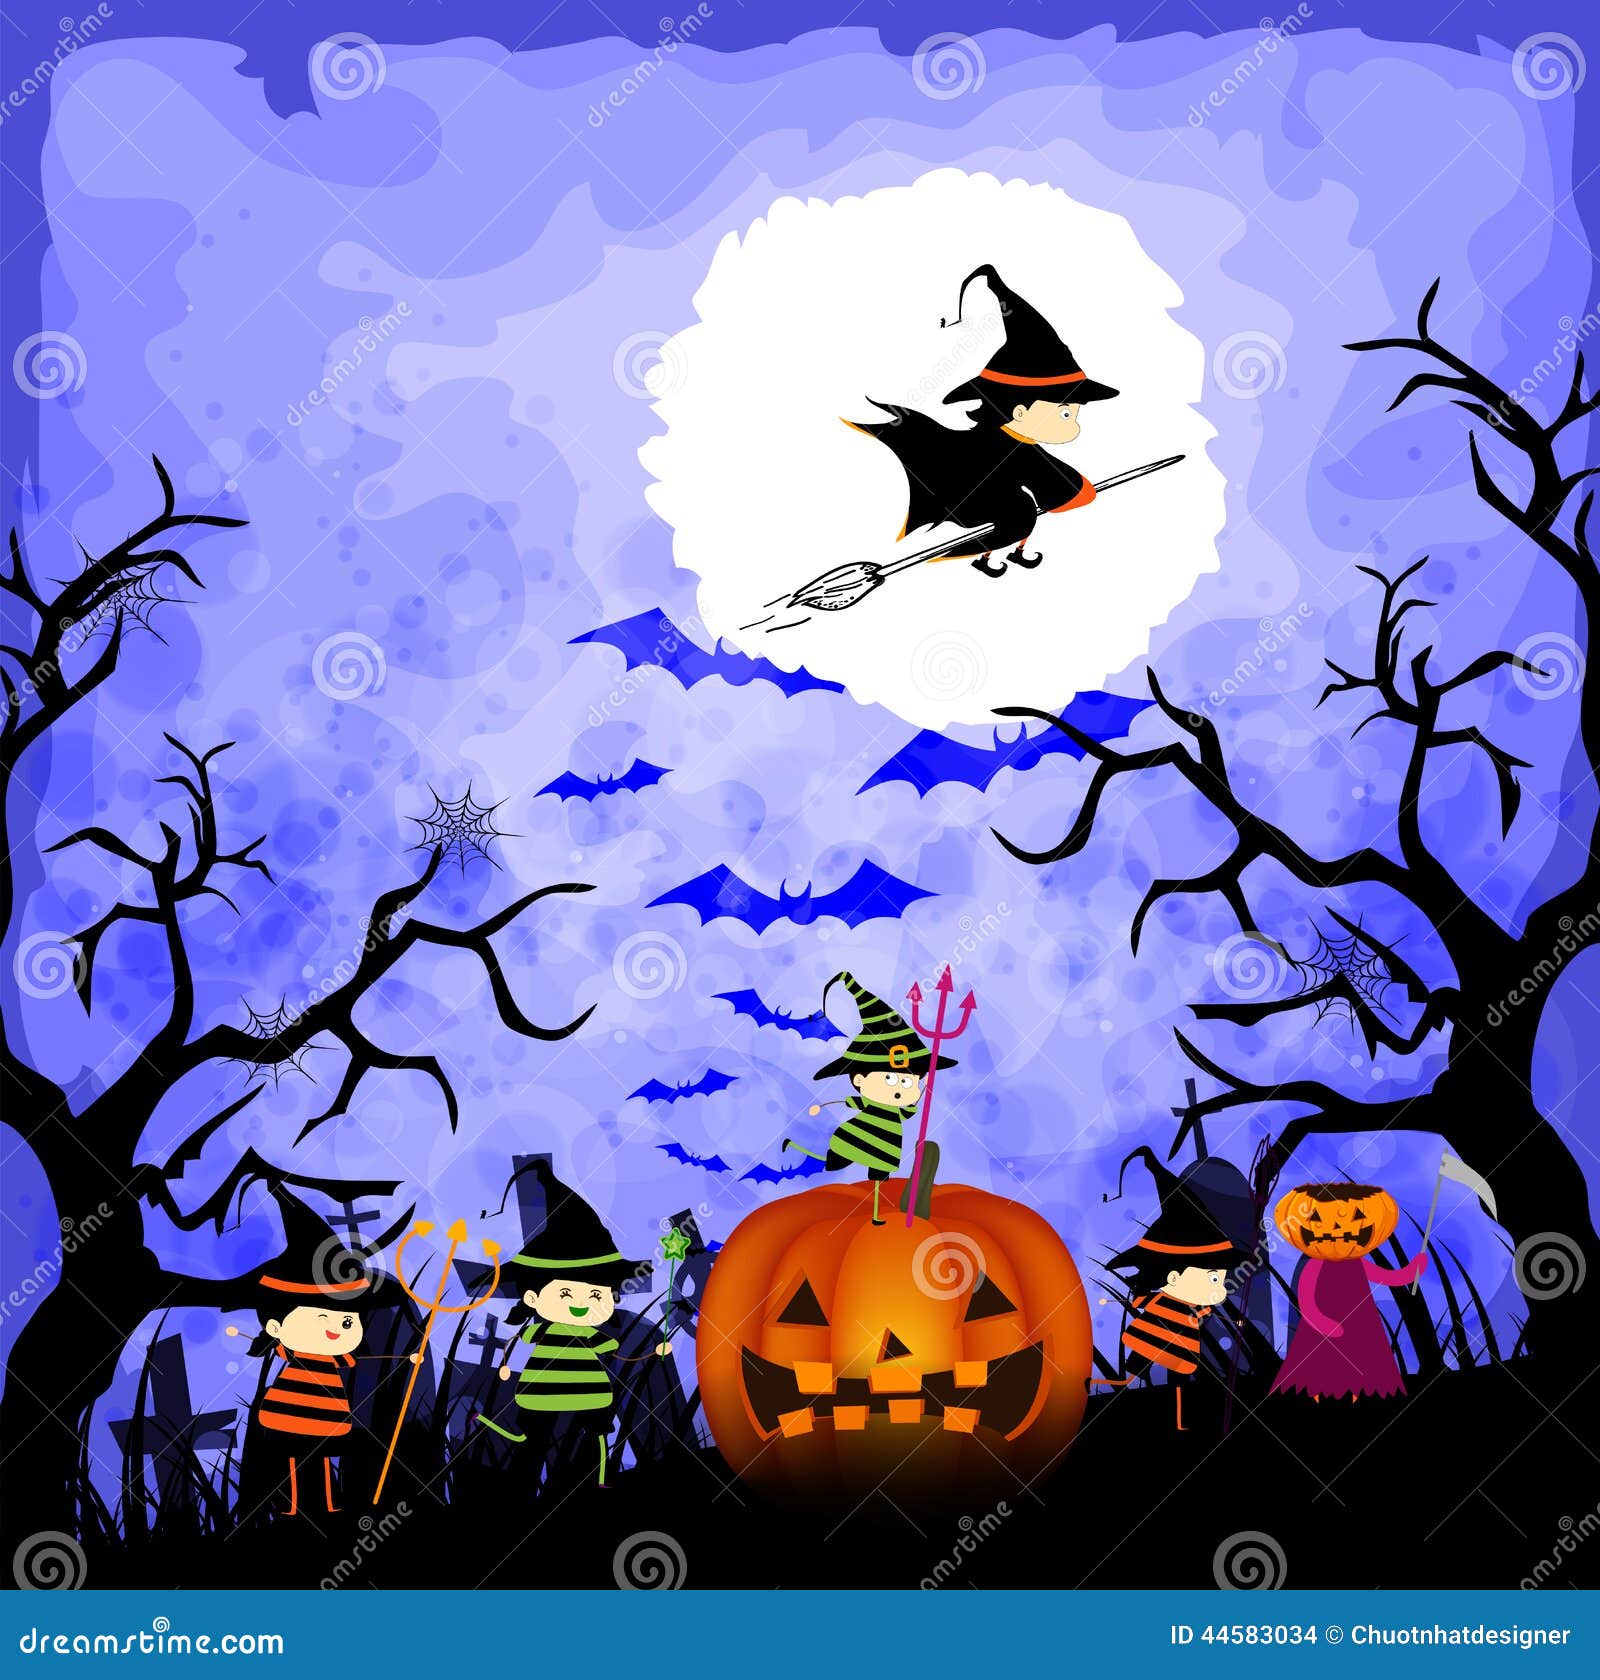 Kids in halloween costumes stock vector. Illustration of decoration ...